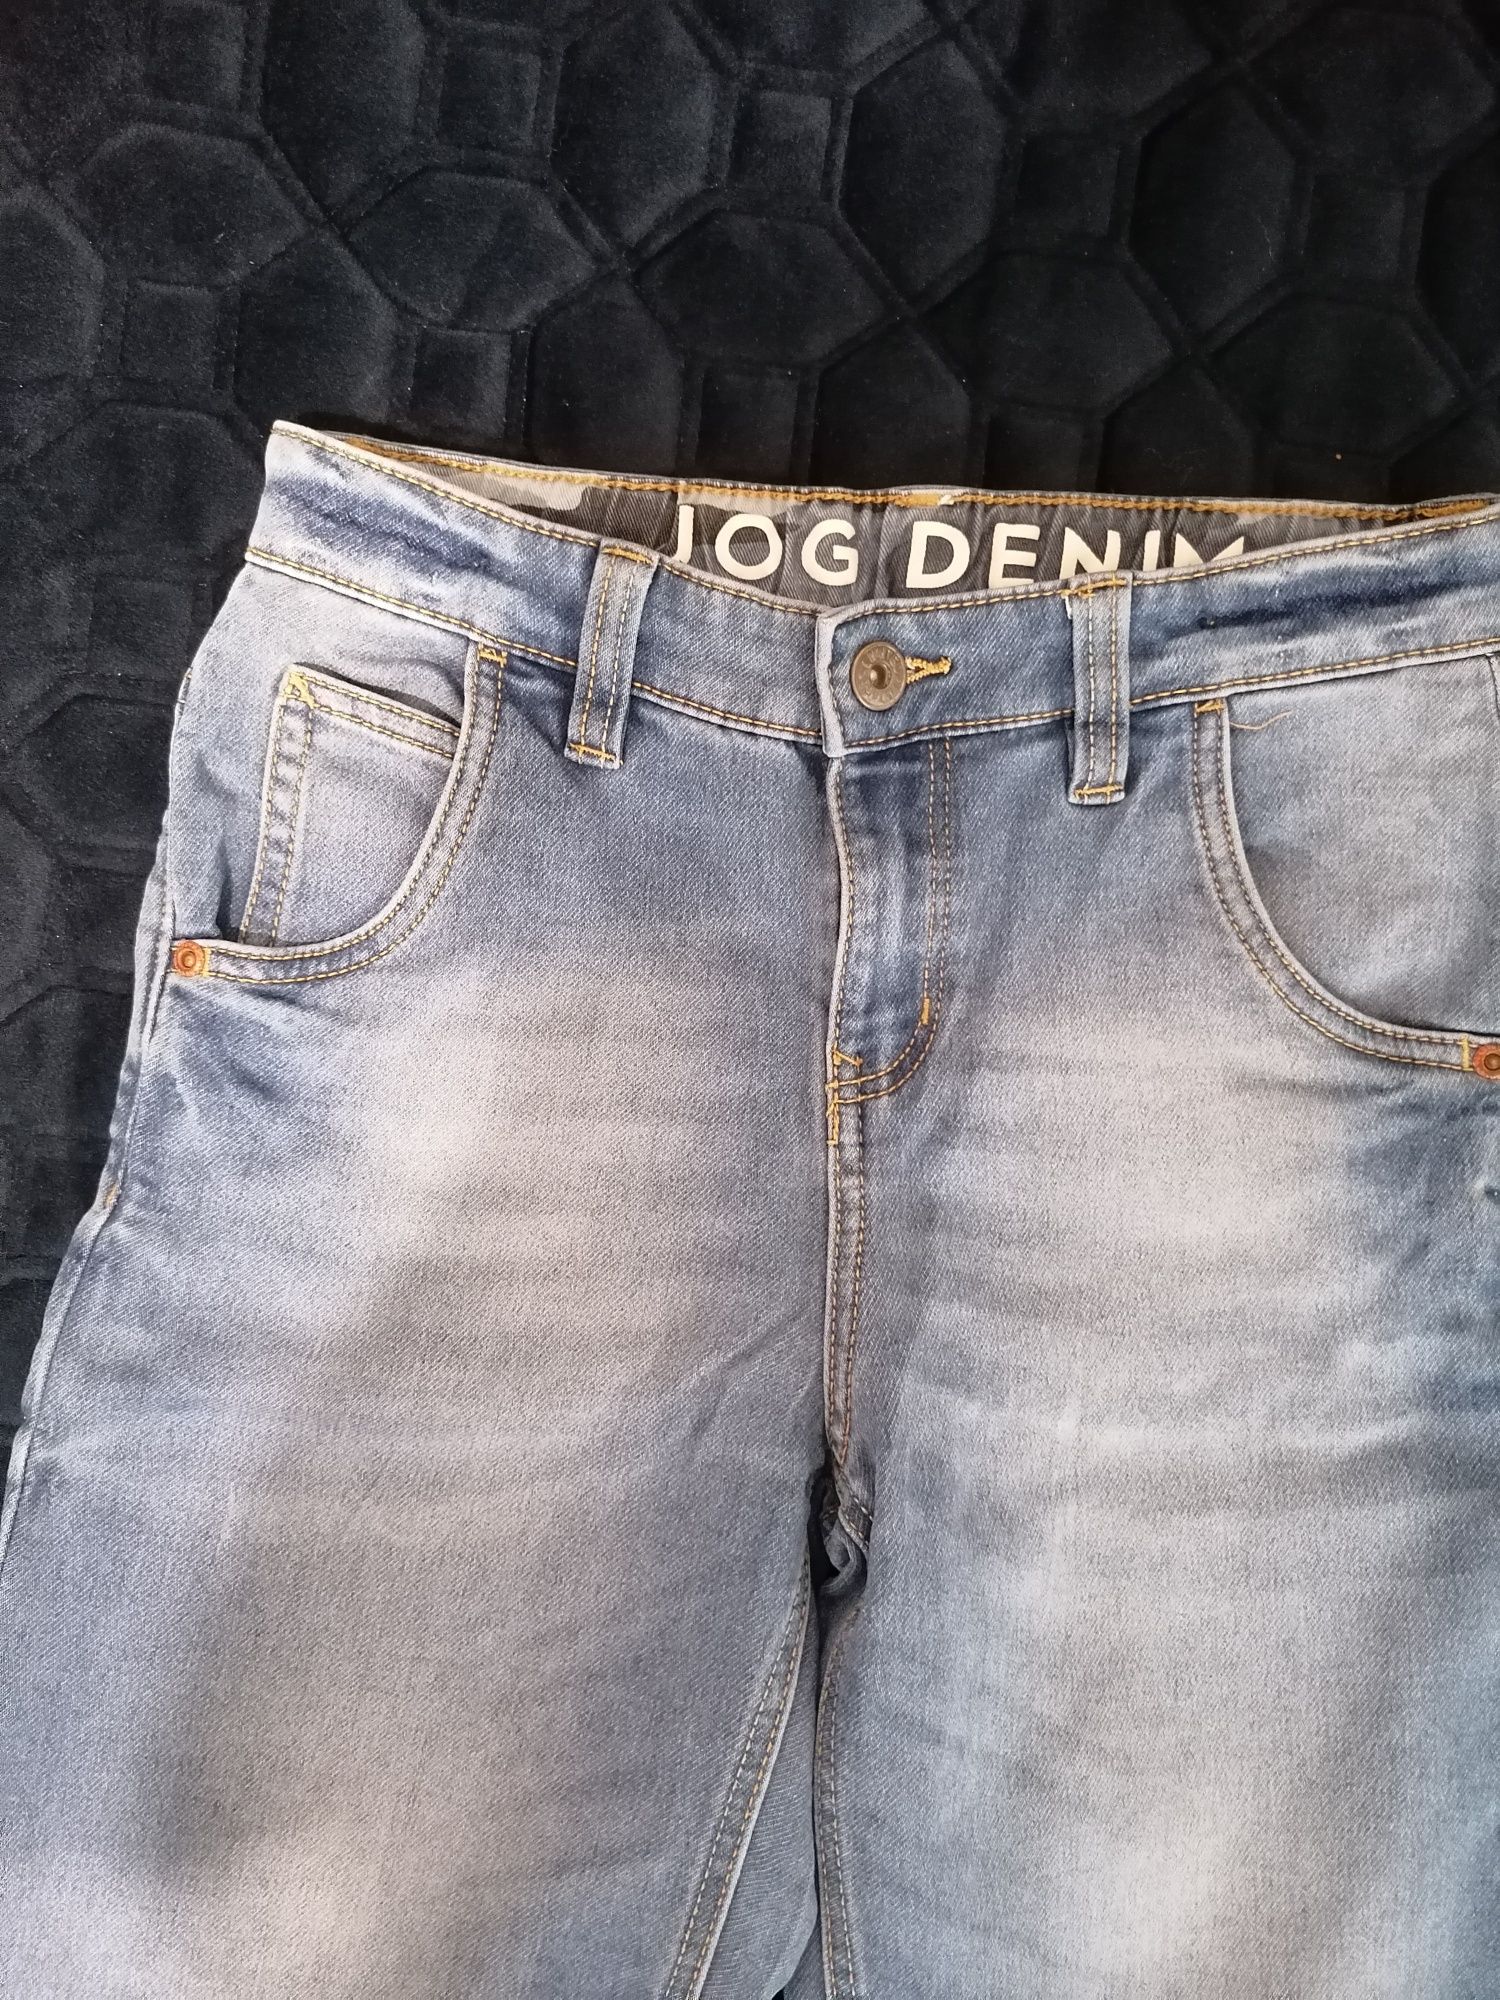 Pantaloni, blugi, jeans scurți Zara,H&M,Palomino,băieți mar.134,140 cm